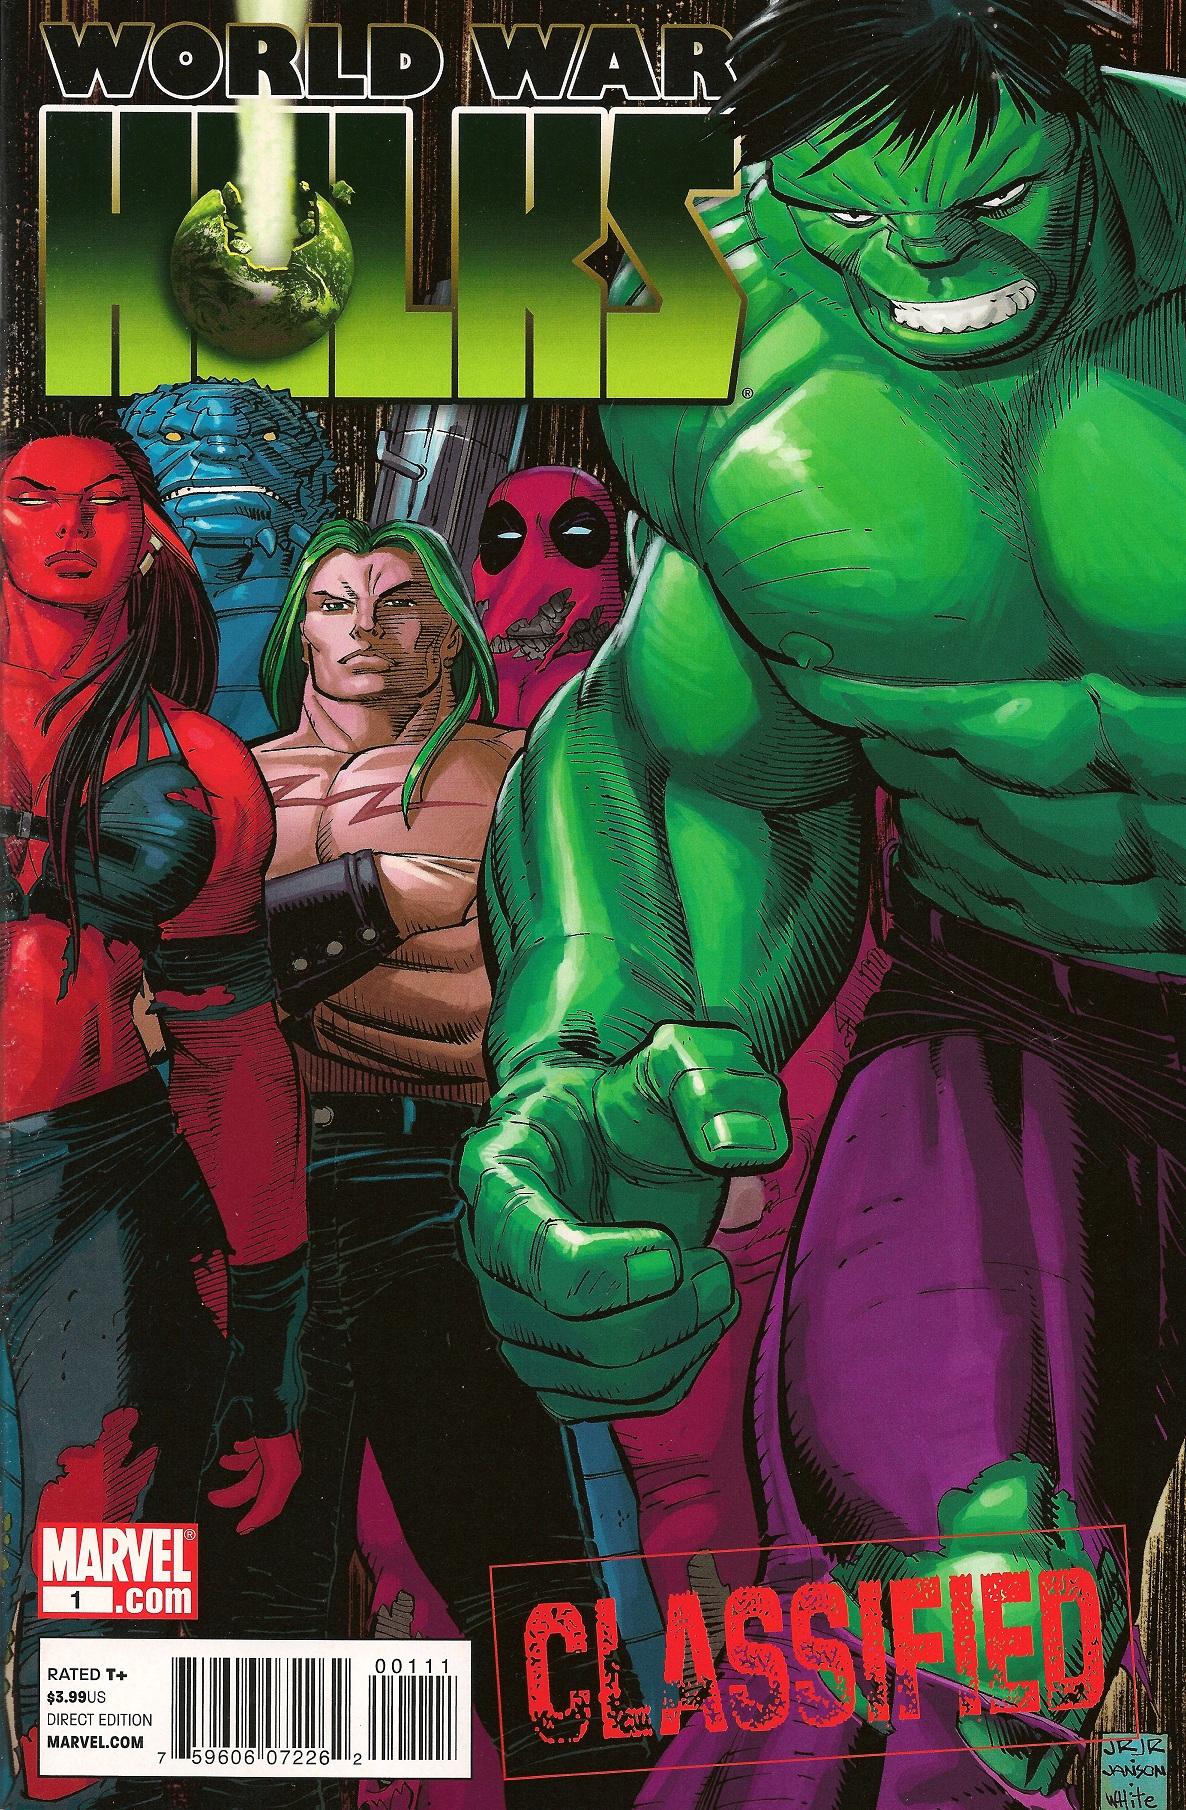 World War Hulks Vol. 1 #1